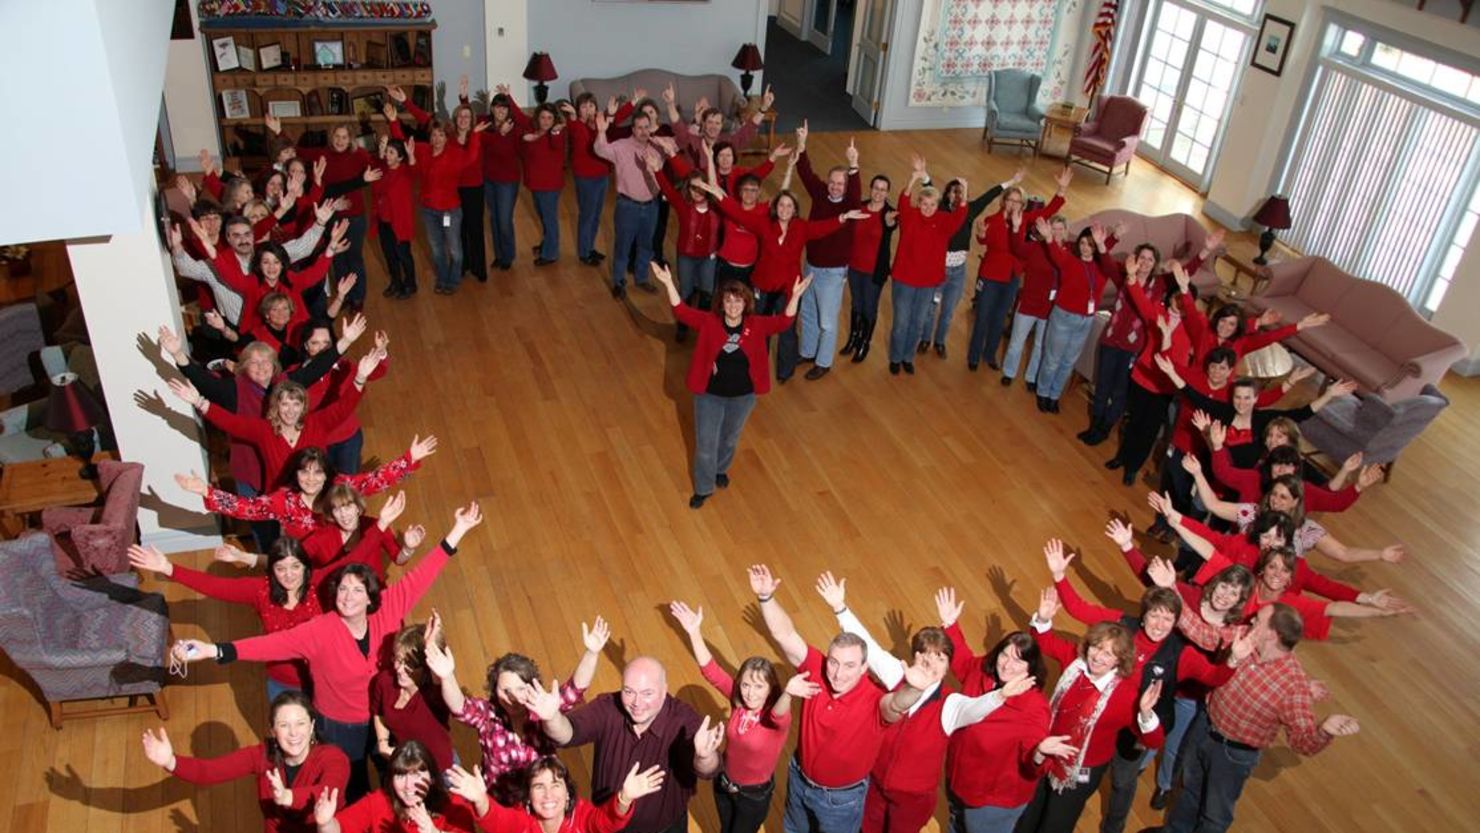 The American Heart Association's "Go Red for Women" movement raises awareness about women's heart health.